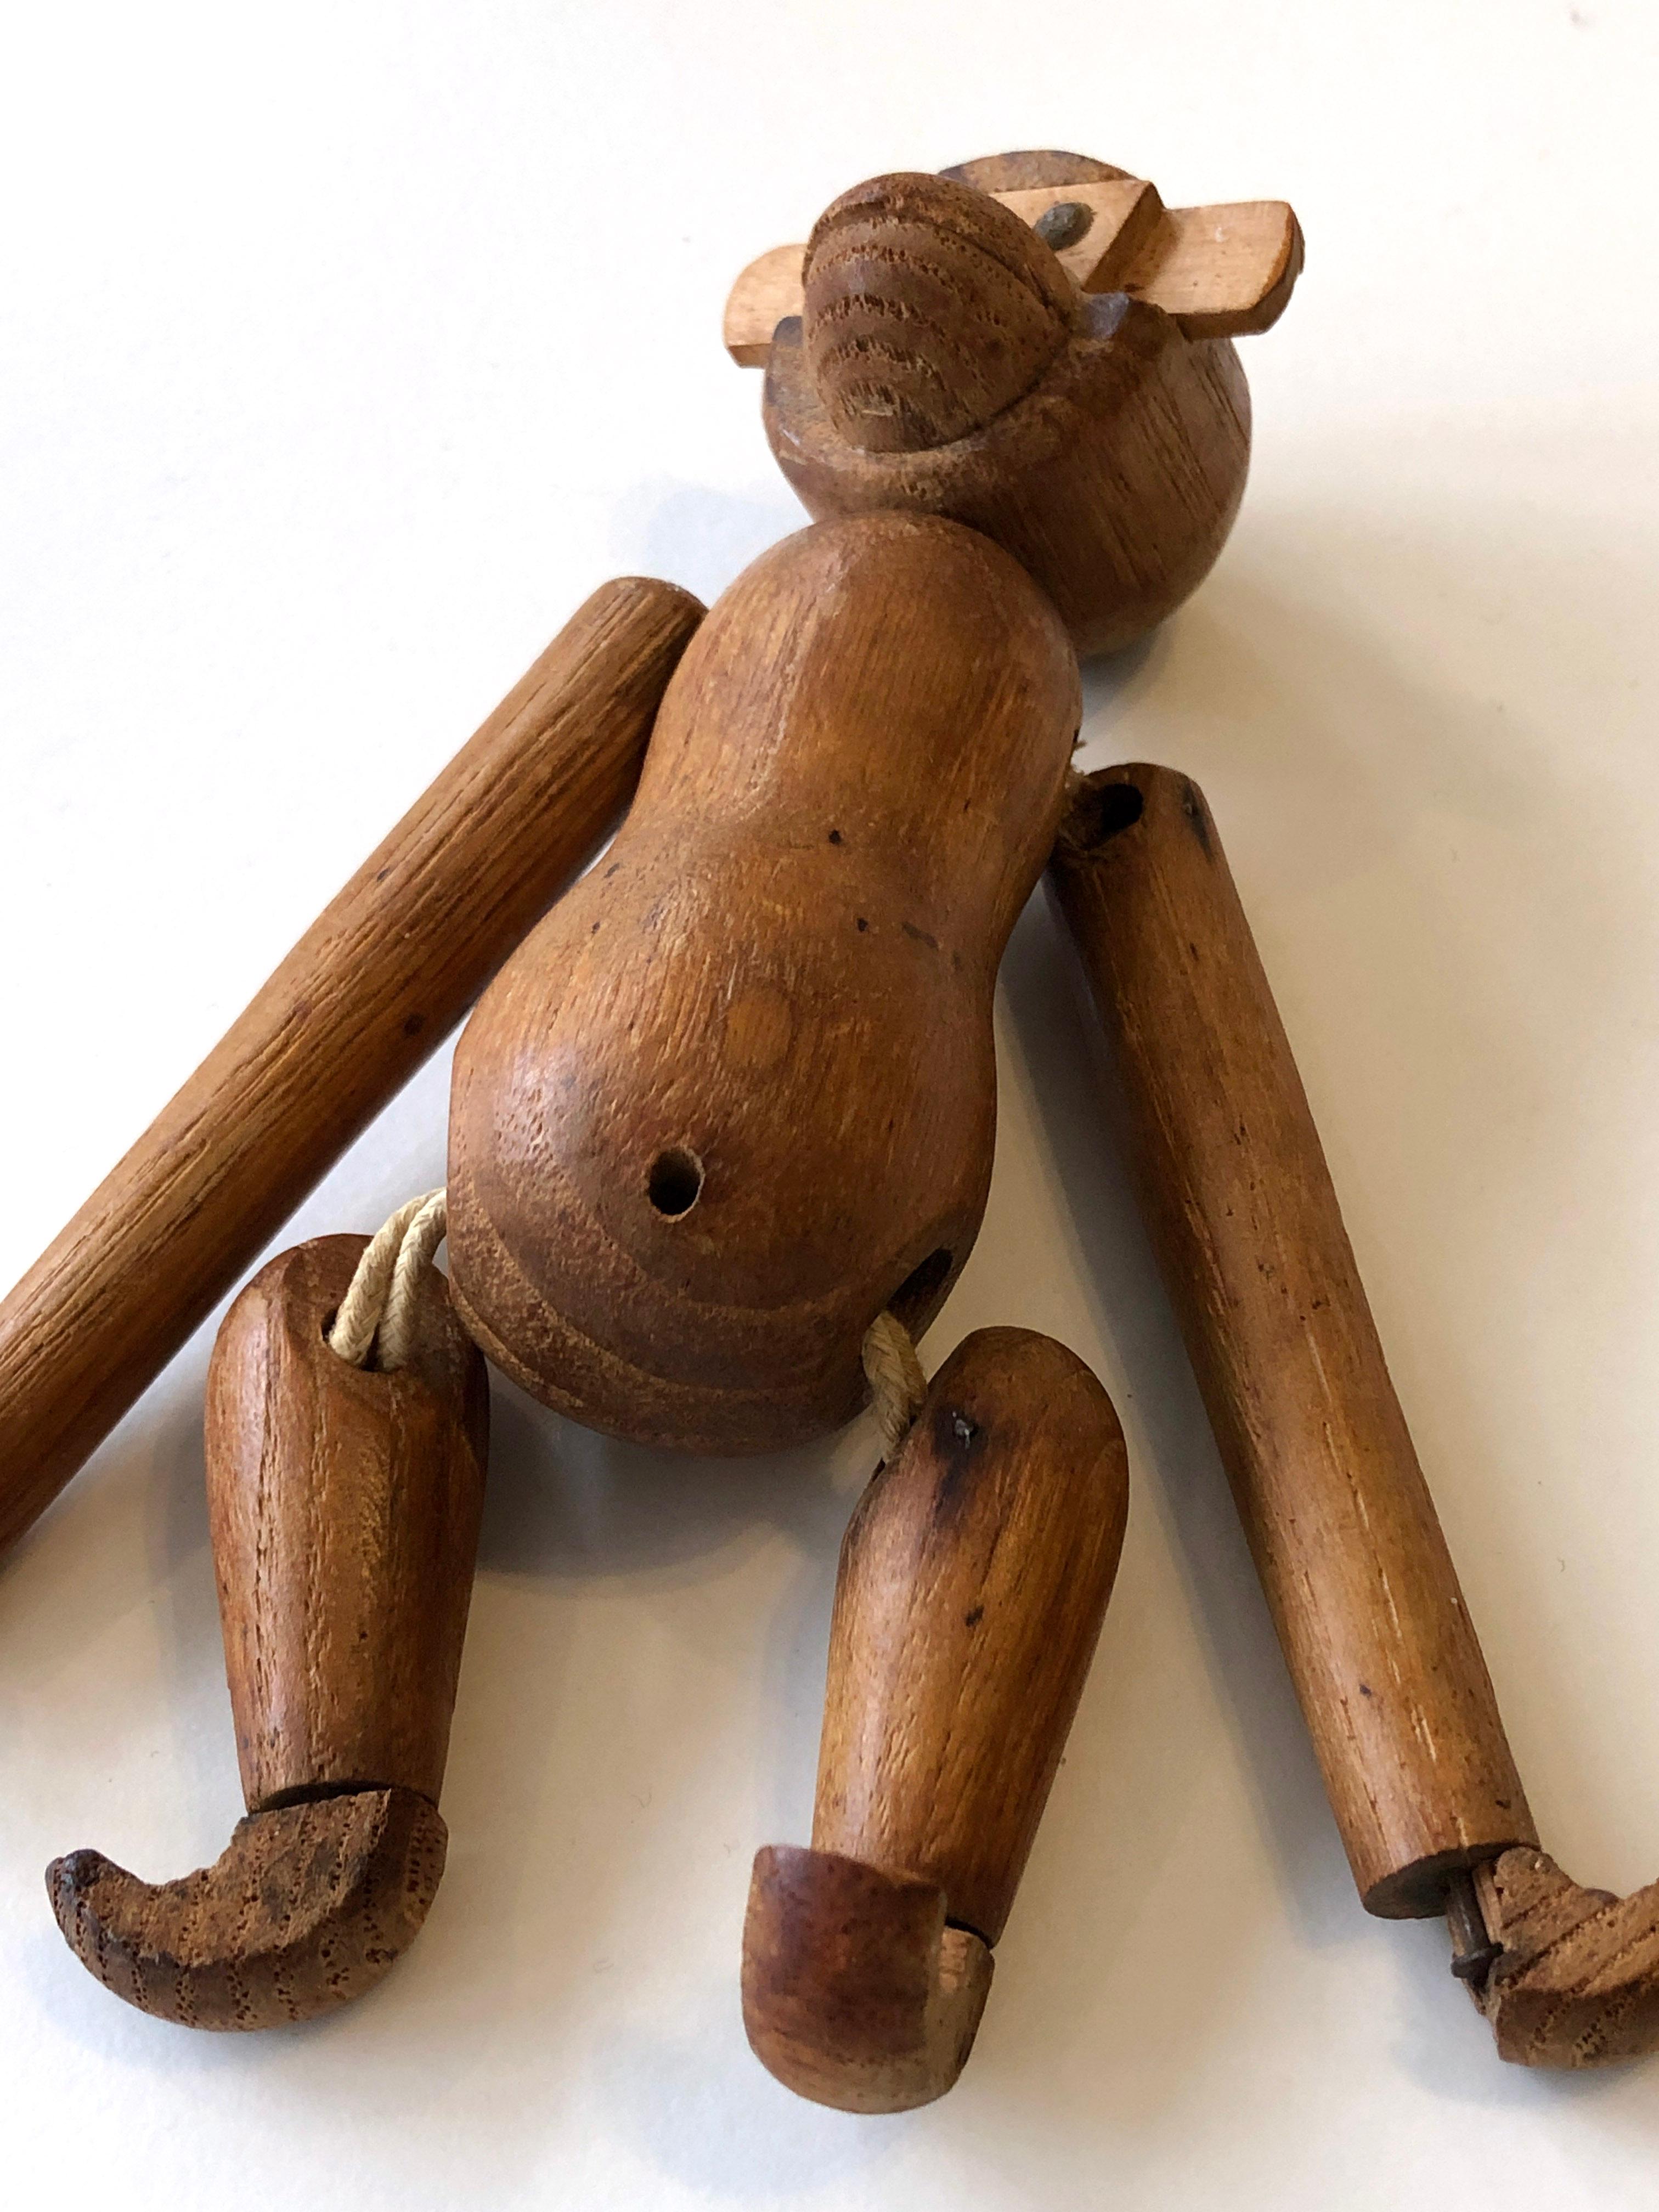 Hardwood Vintage 1950's small wooden monkey - Kay Bojesen style For Sale